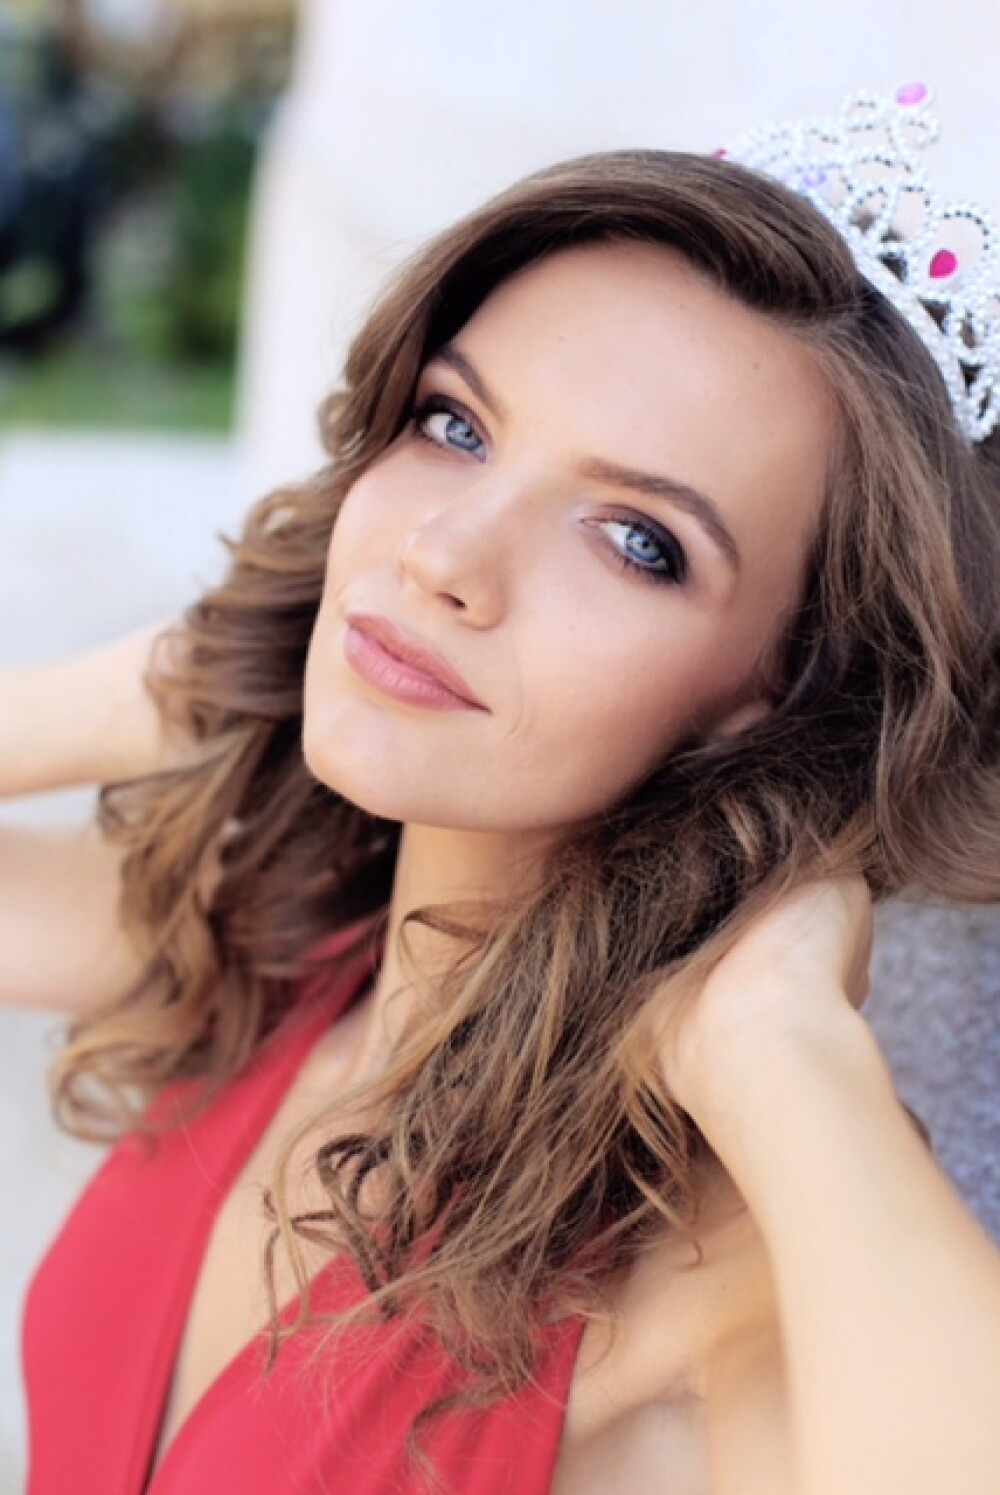 Frumoasa clujeanca, Arianna Mile reprezinta anul acesta Romania la “Miss Model of the World